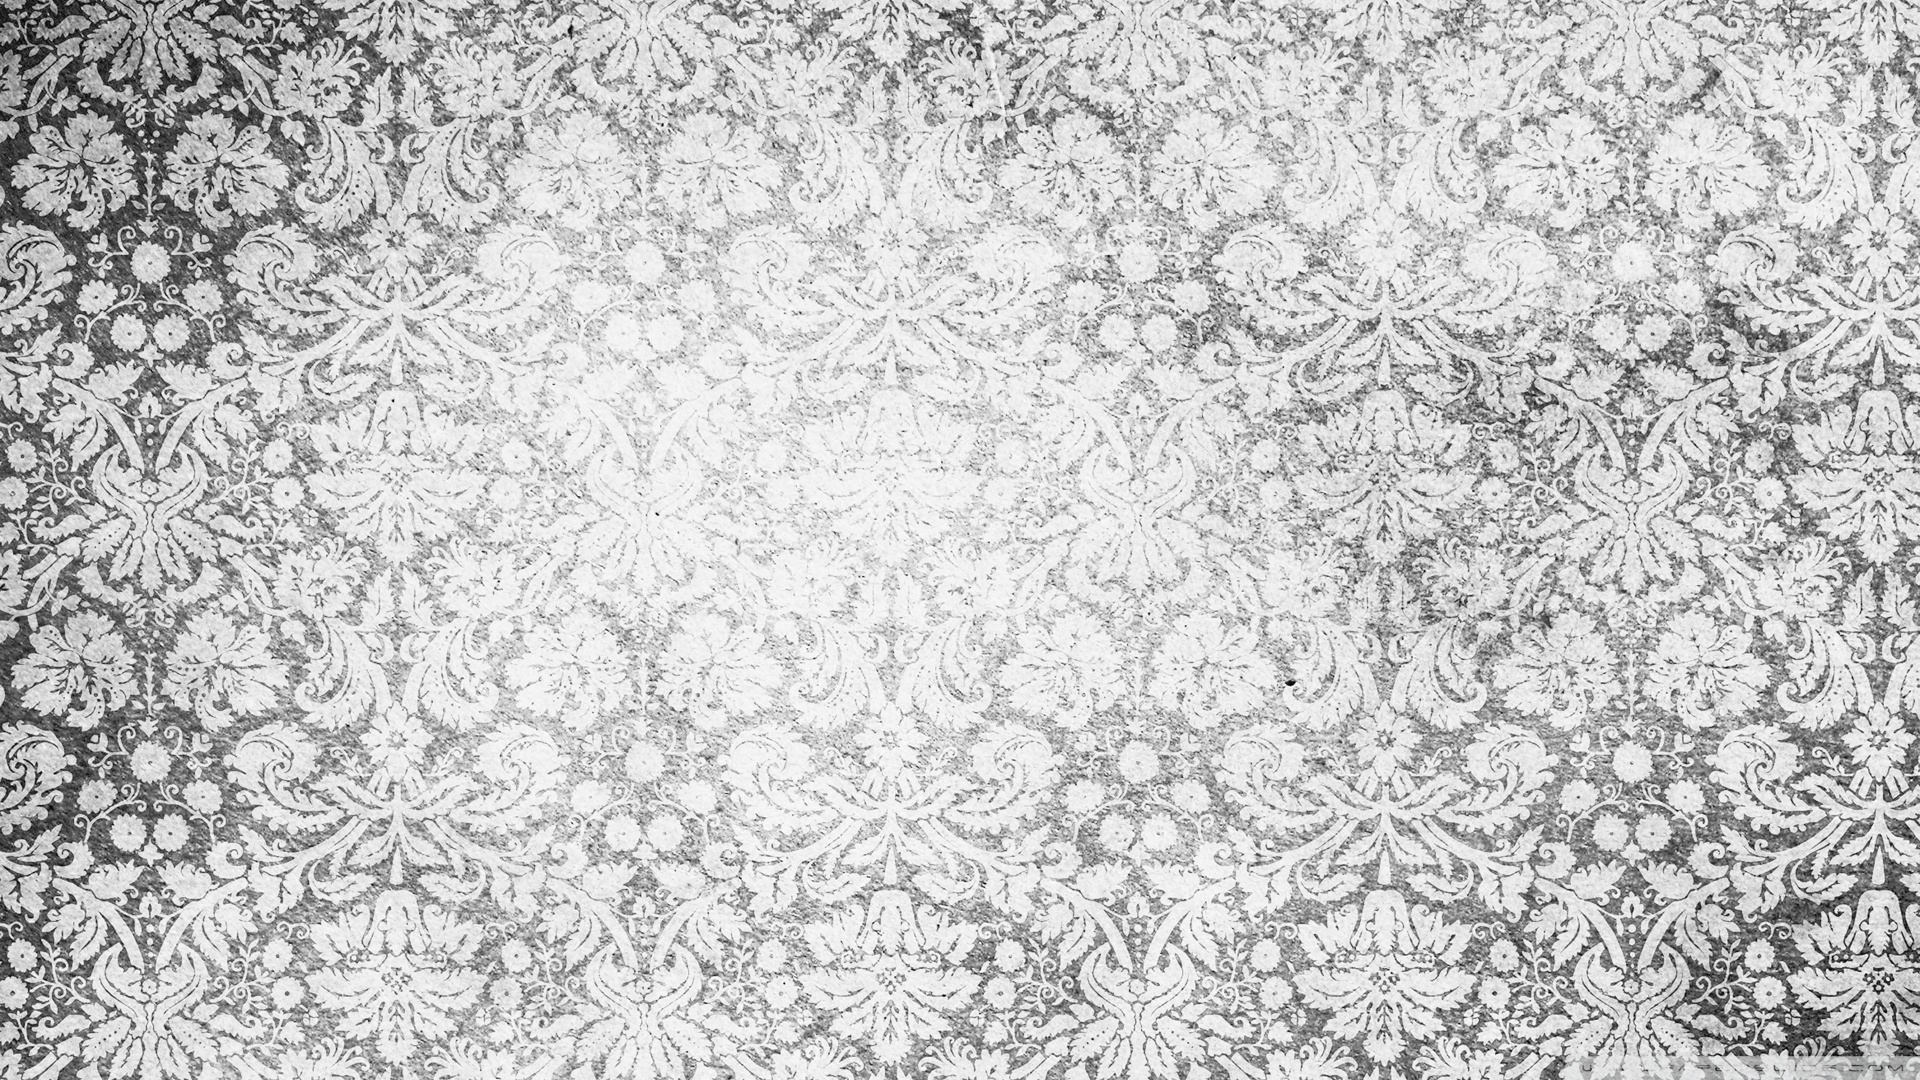 black and white wallpaper designs,pattern,line,floral design,design,textile